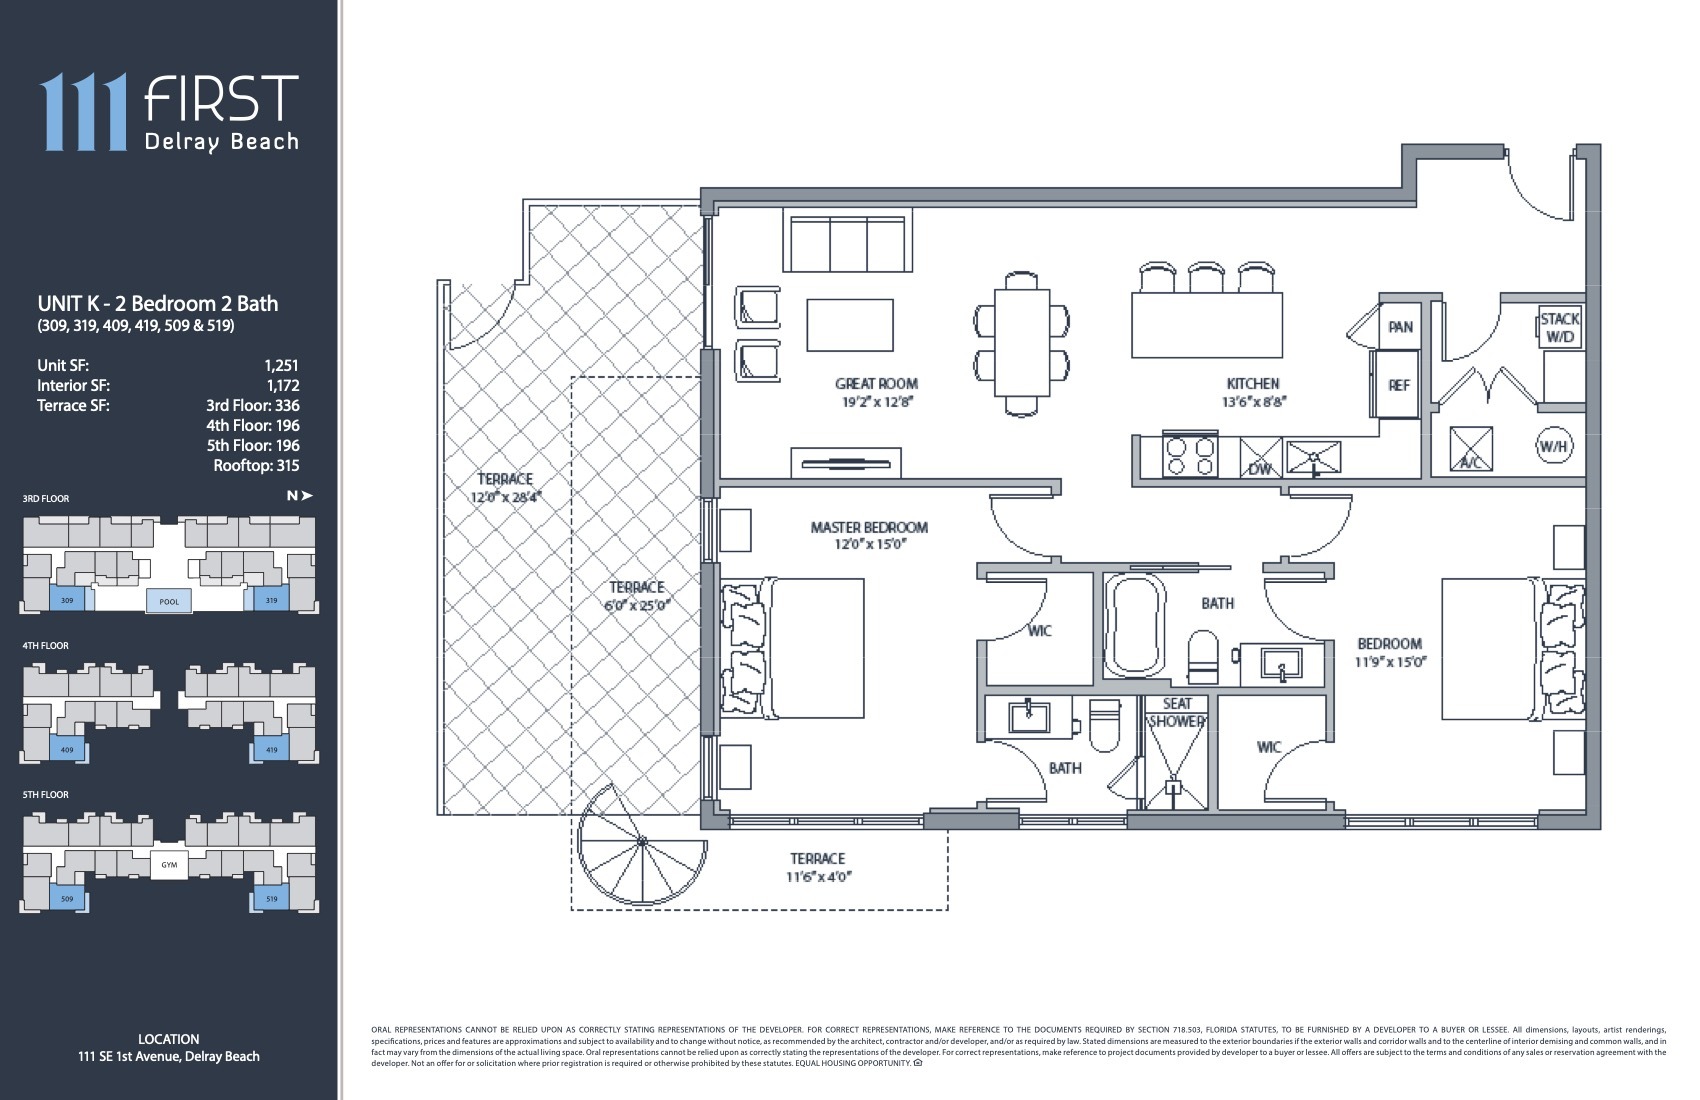 Floor Plan for 111 First Delray Floorplans, Unit K